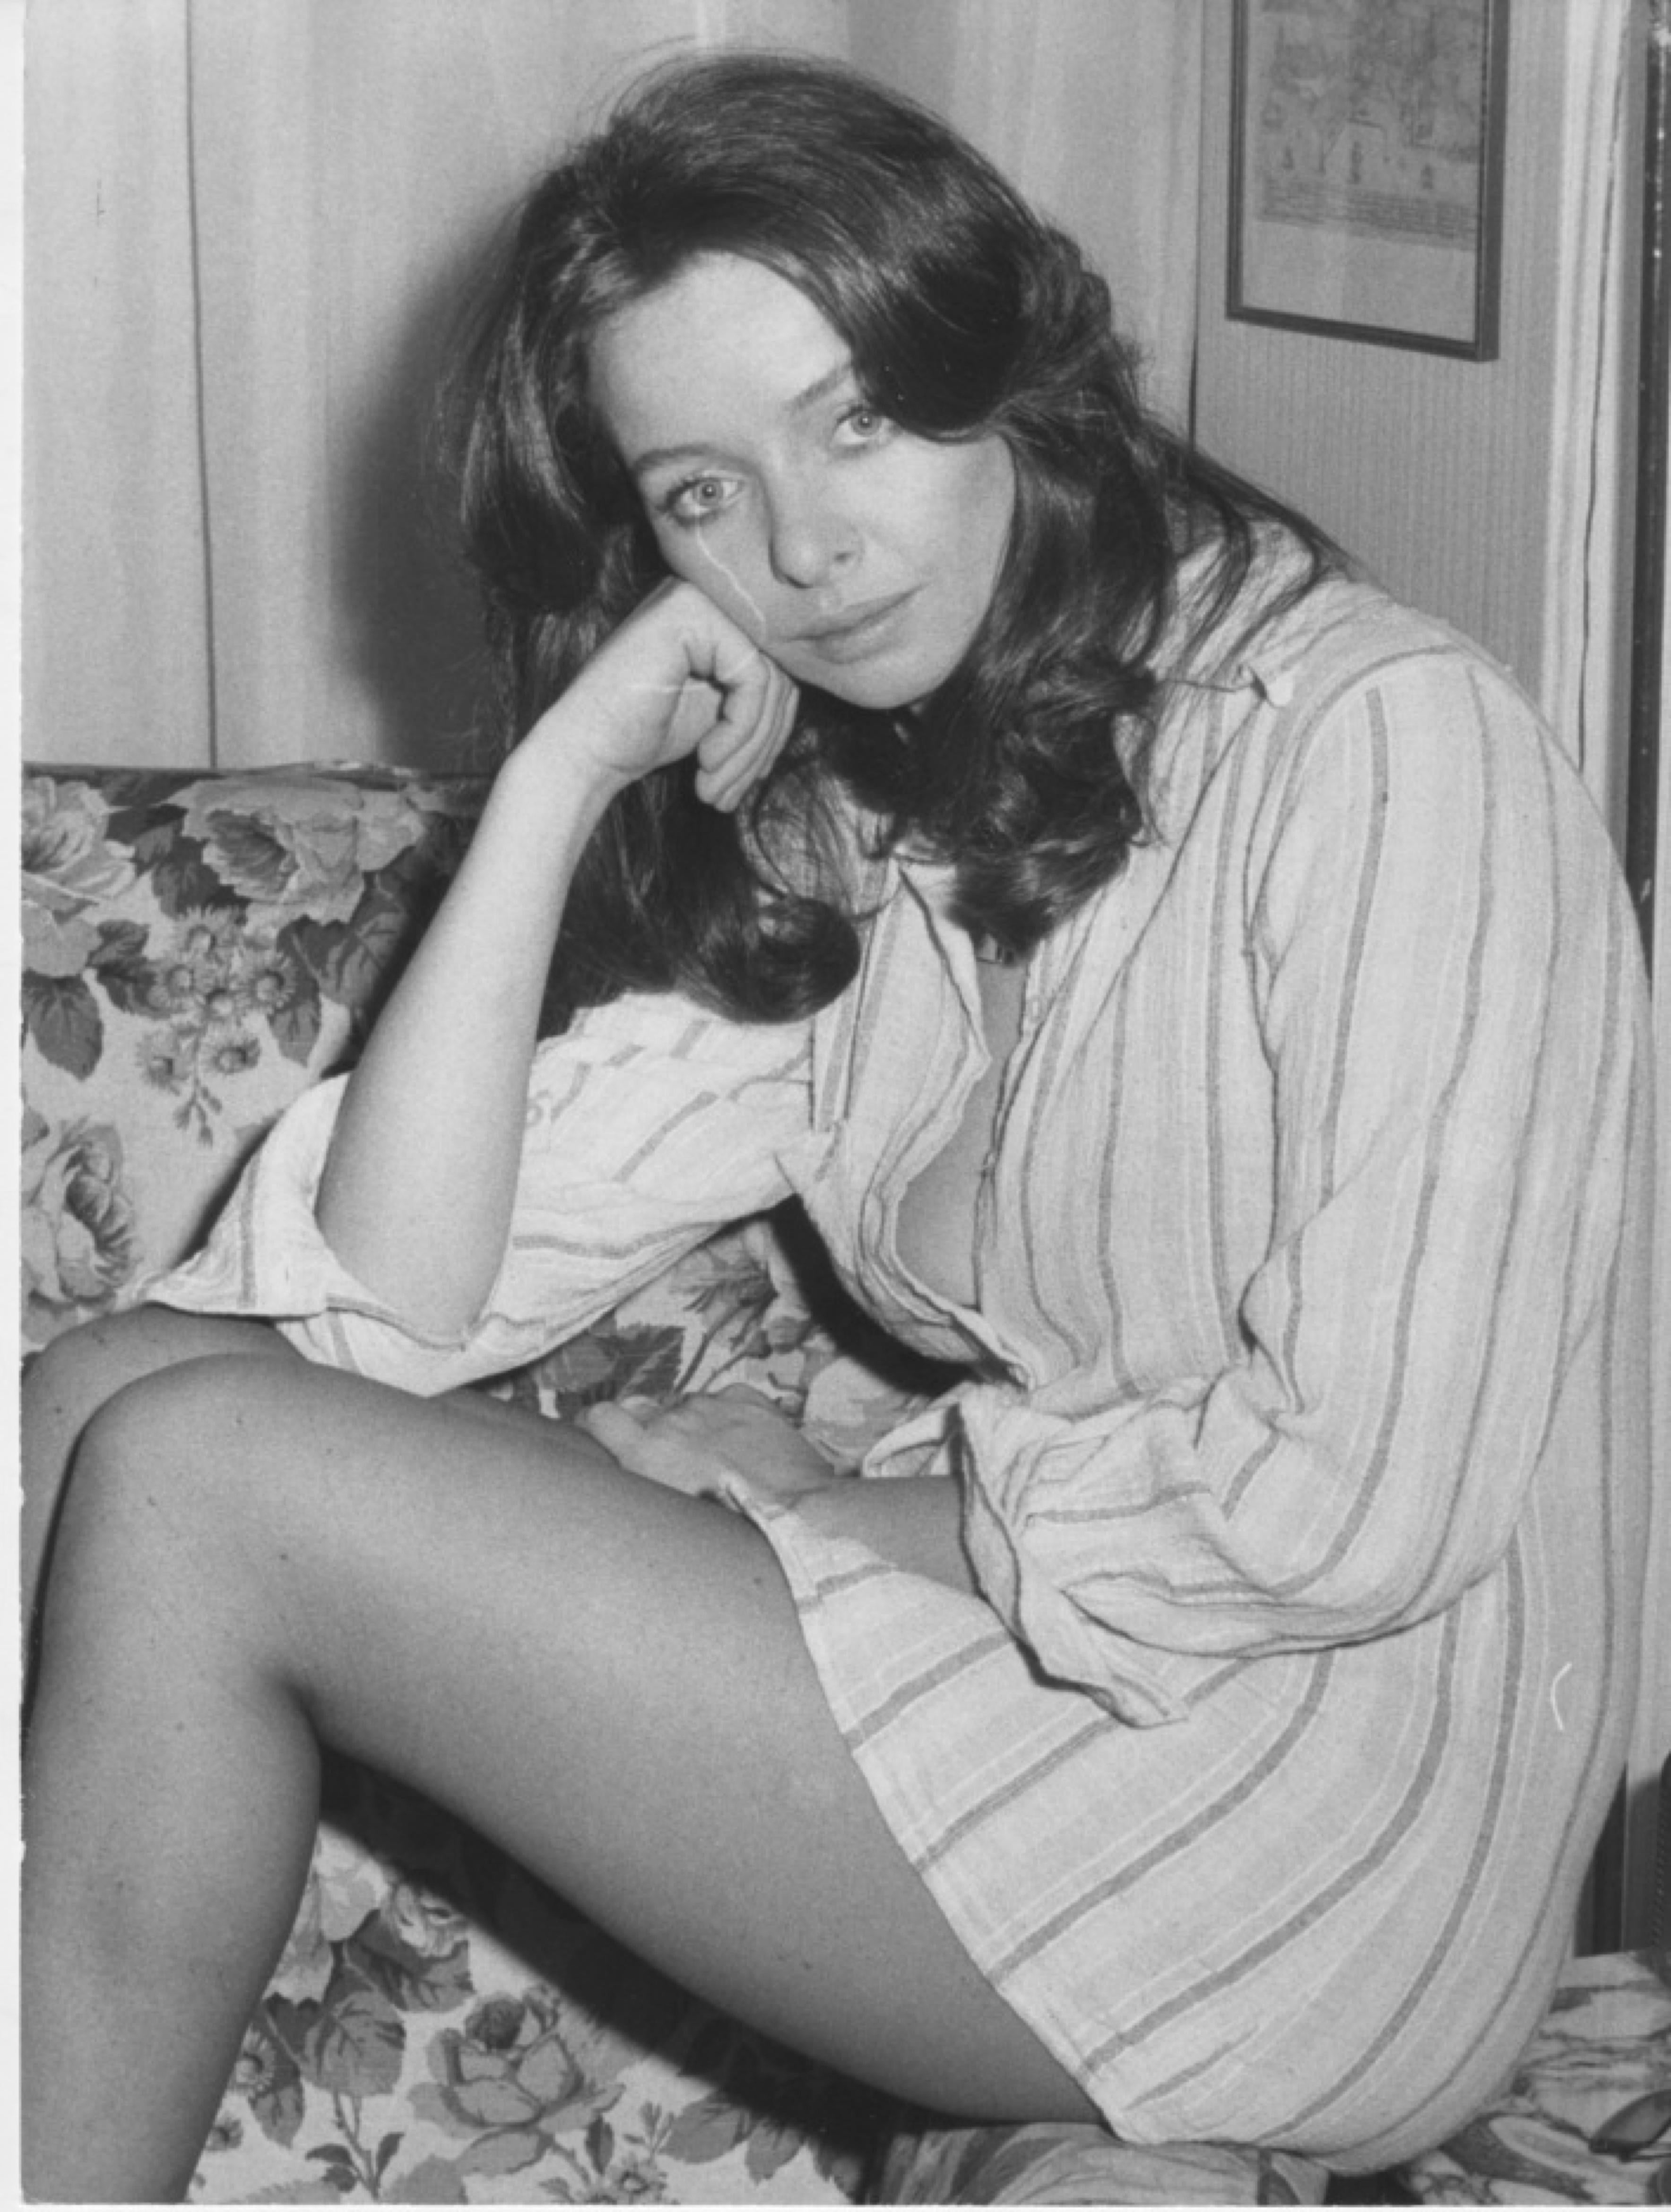 Unknown Portrait Photograph - The Italian Actress Enrica Bonaccorti - Vintage Photo - 1970s